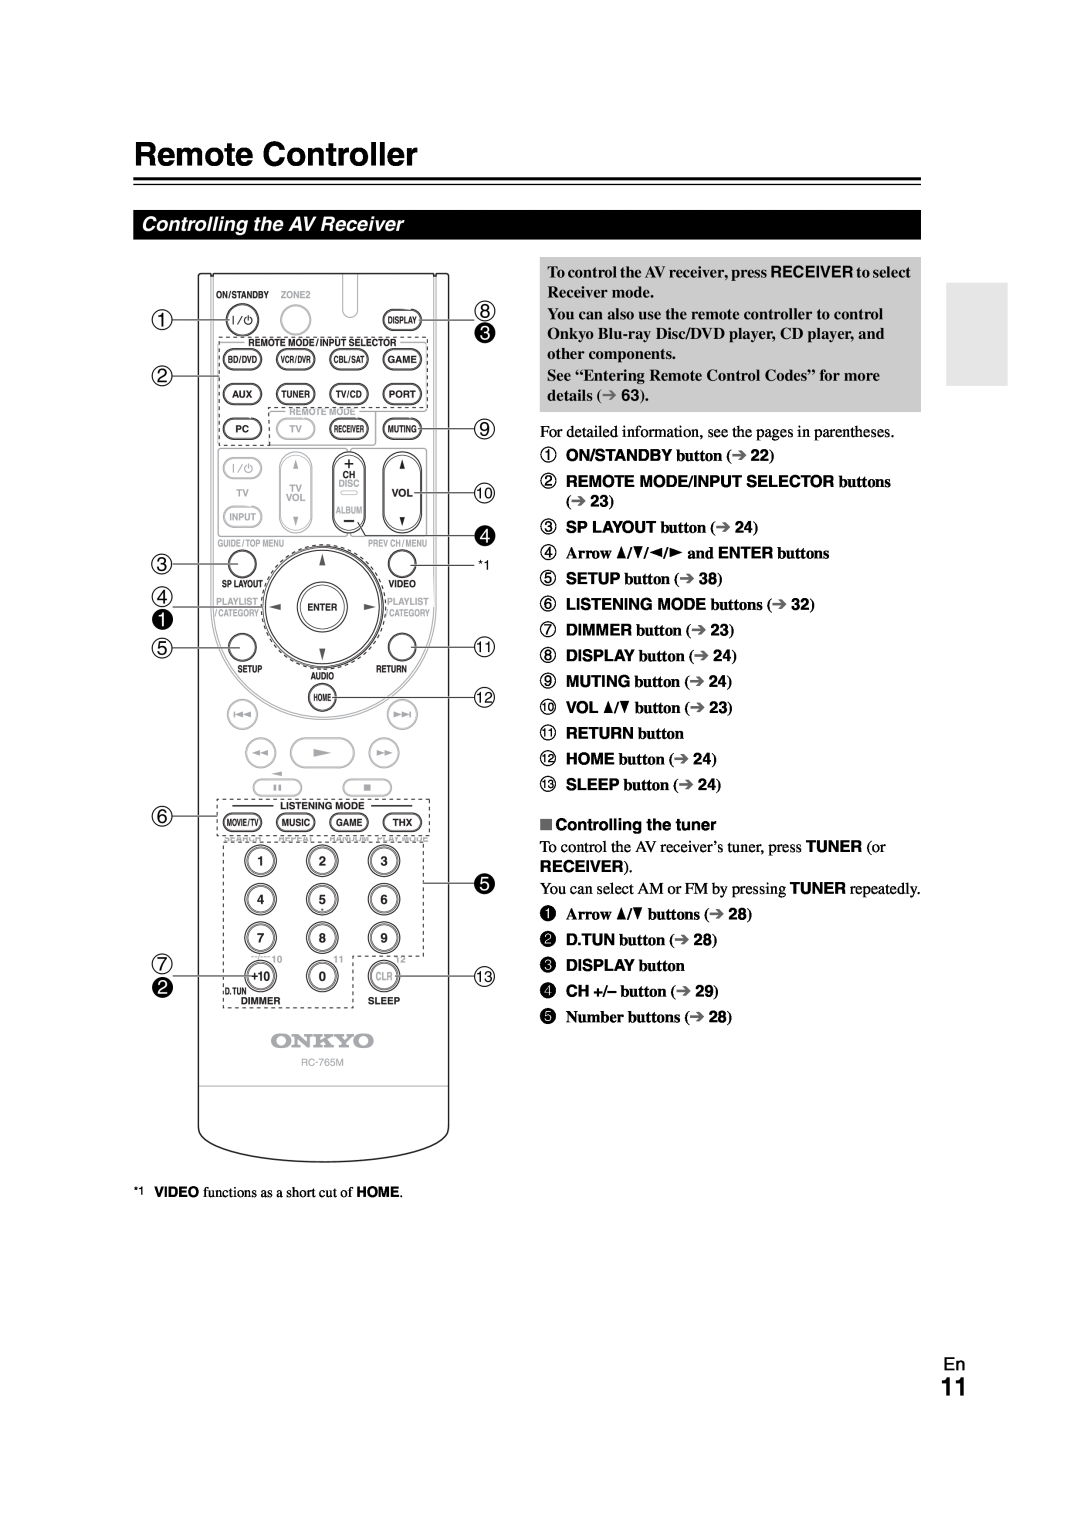 Onkyo SR608 instruction manual Remote Controller 